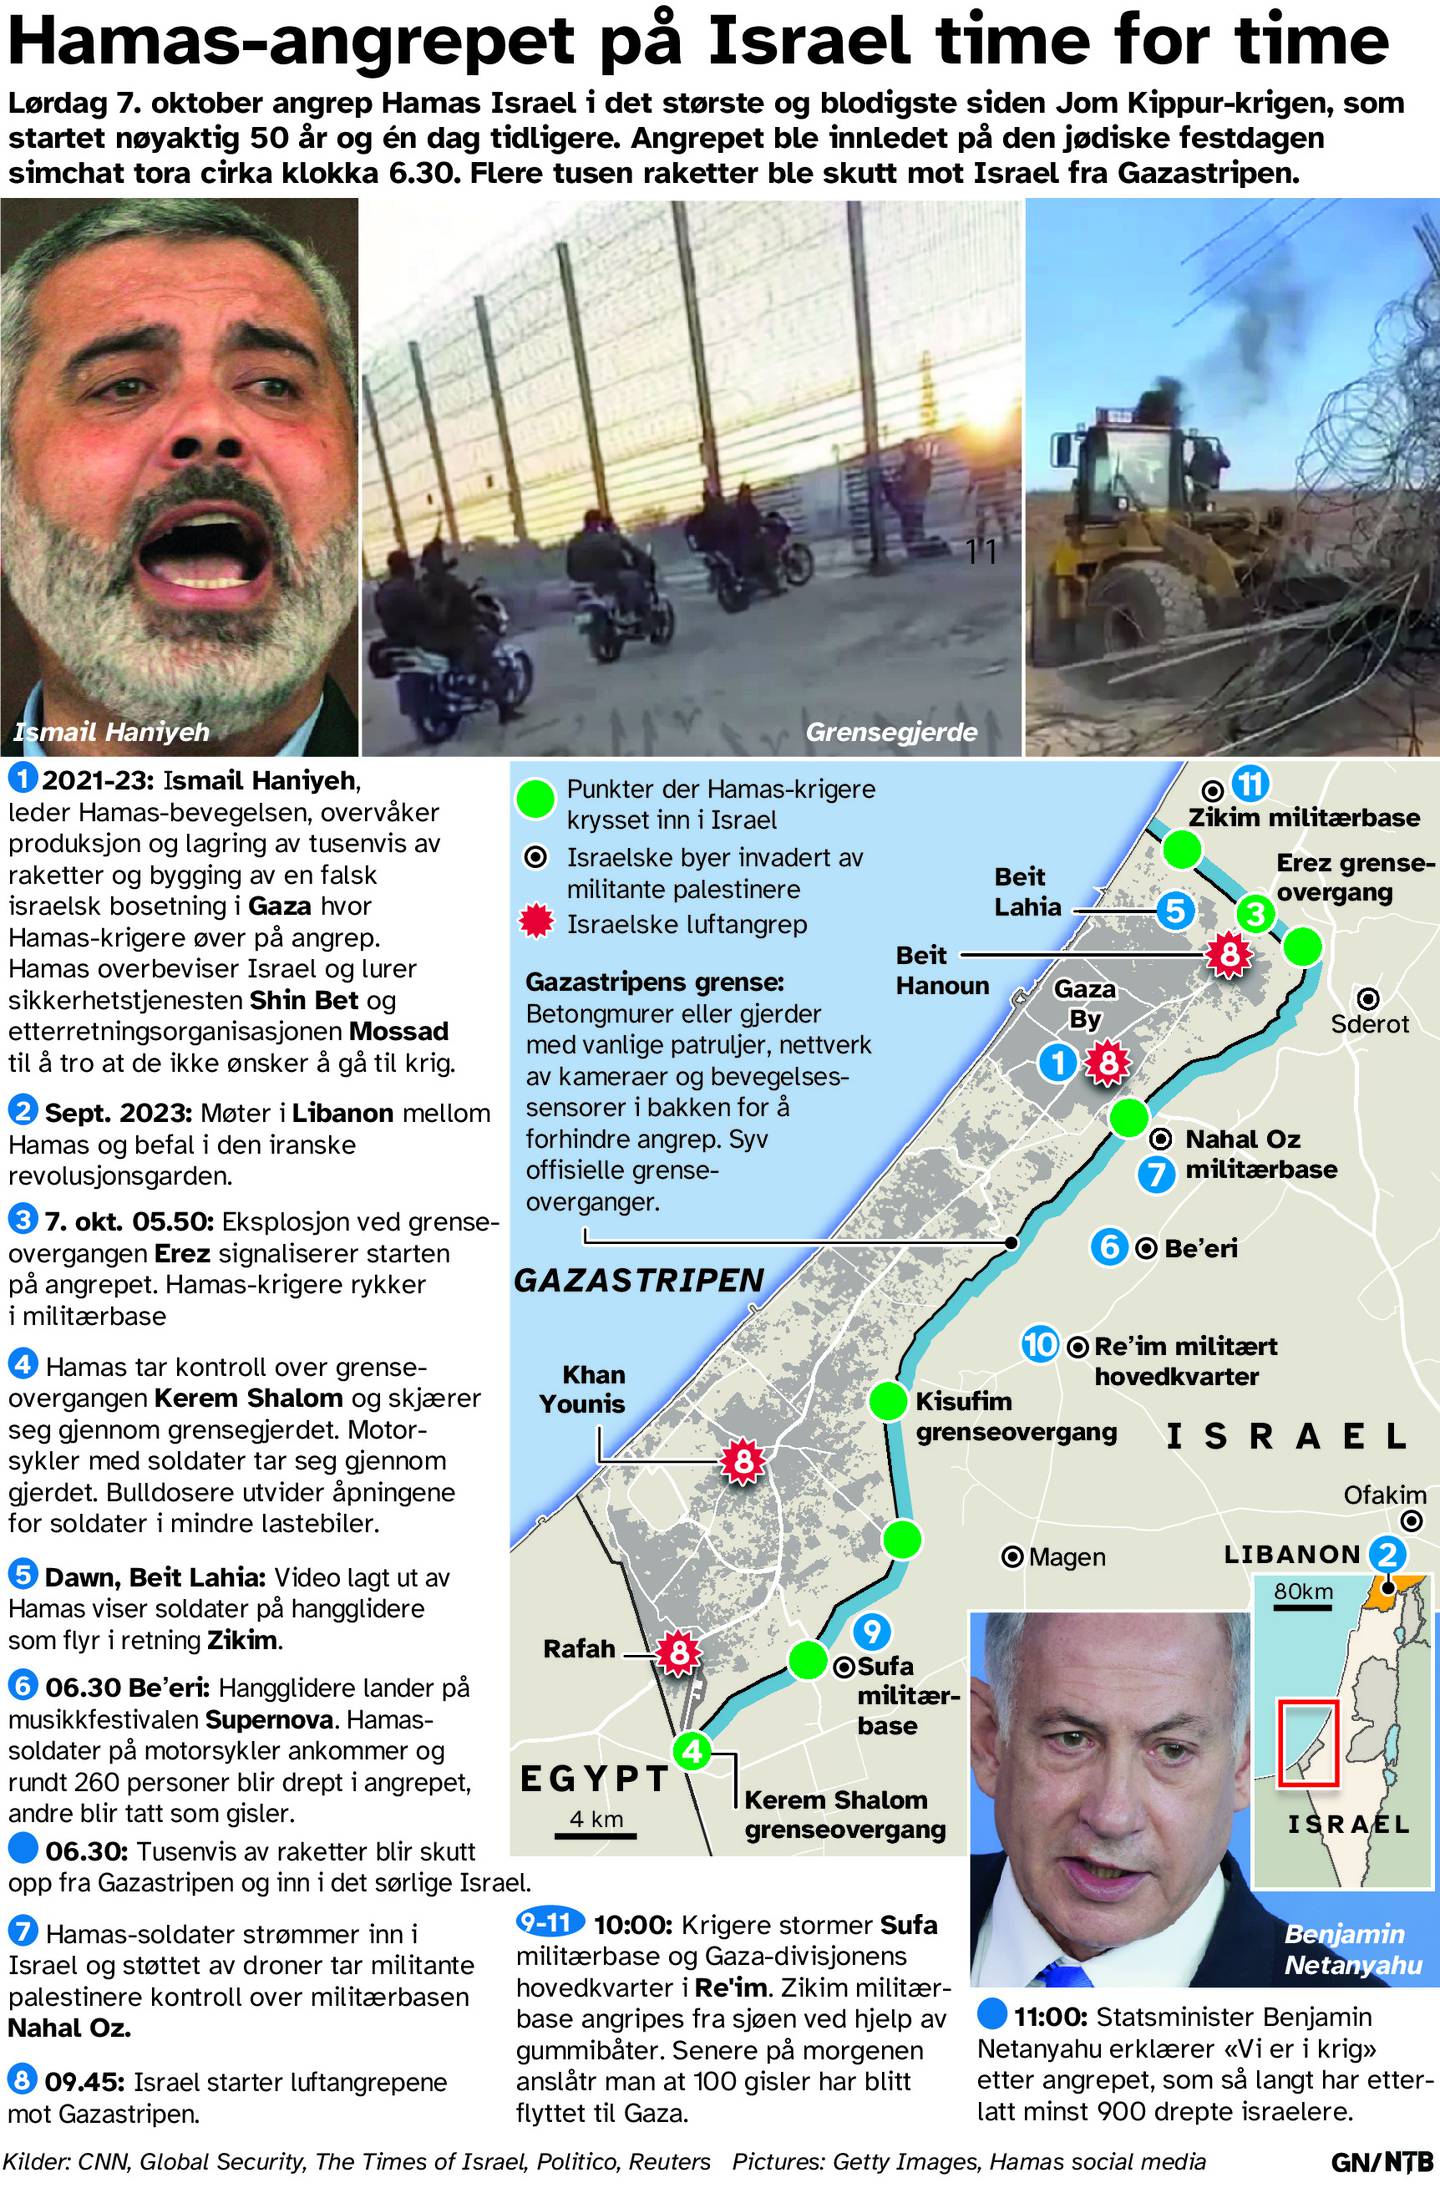 Hamas-angrepet på Israel, time for time.